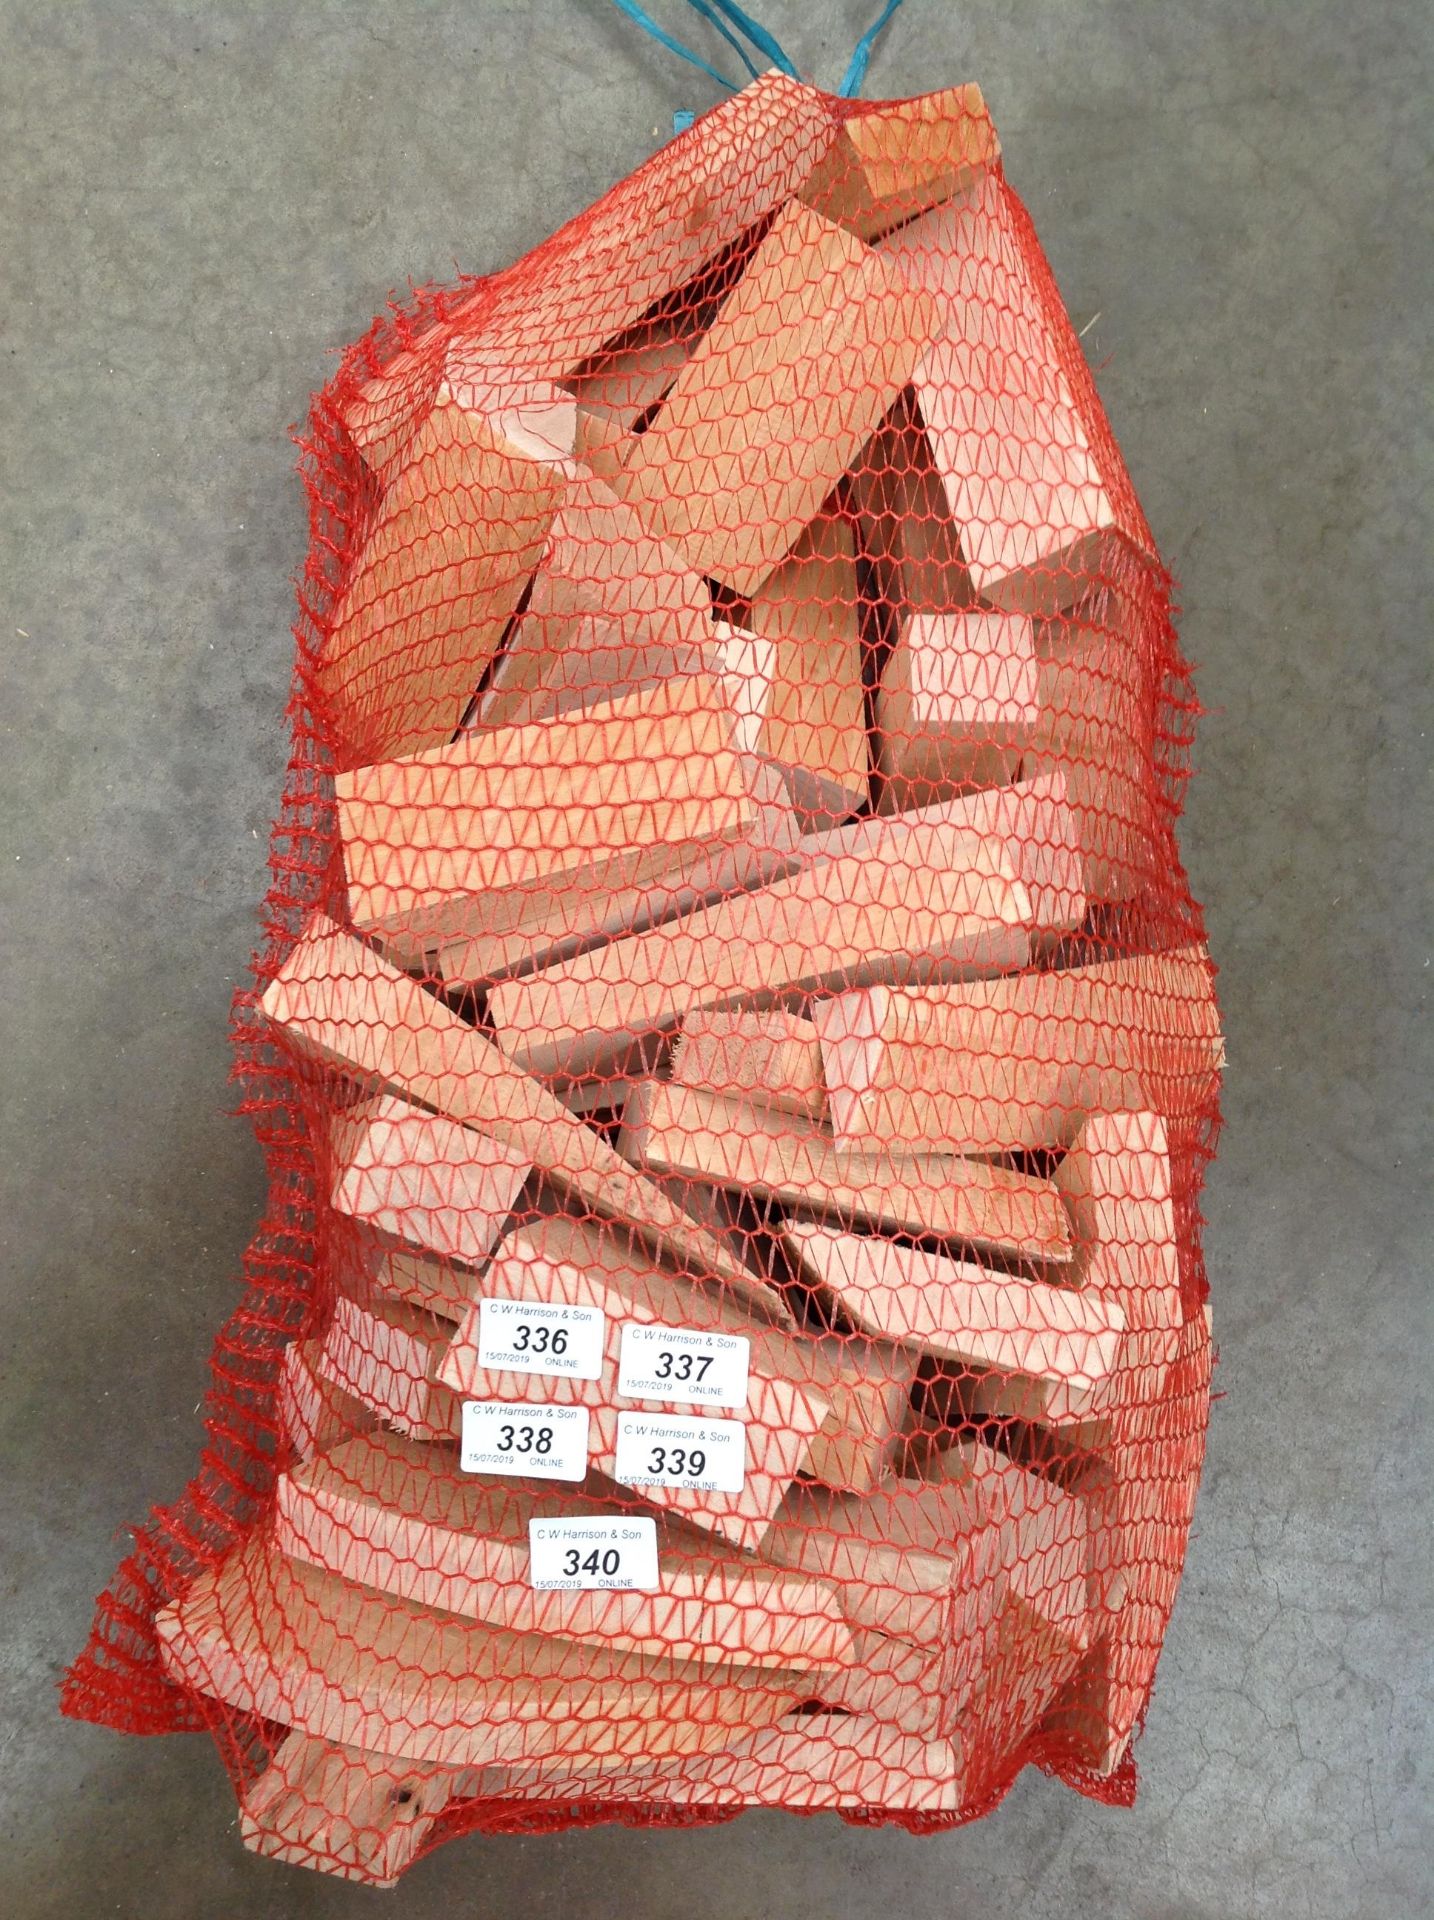 Ten carrot sacks containing hardwood off cuts - teak, birch, beech,